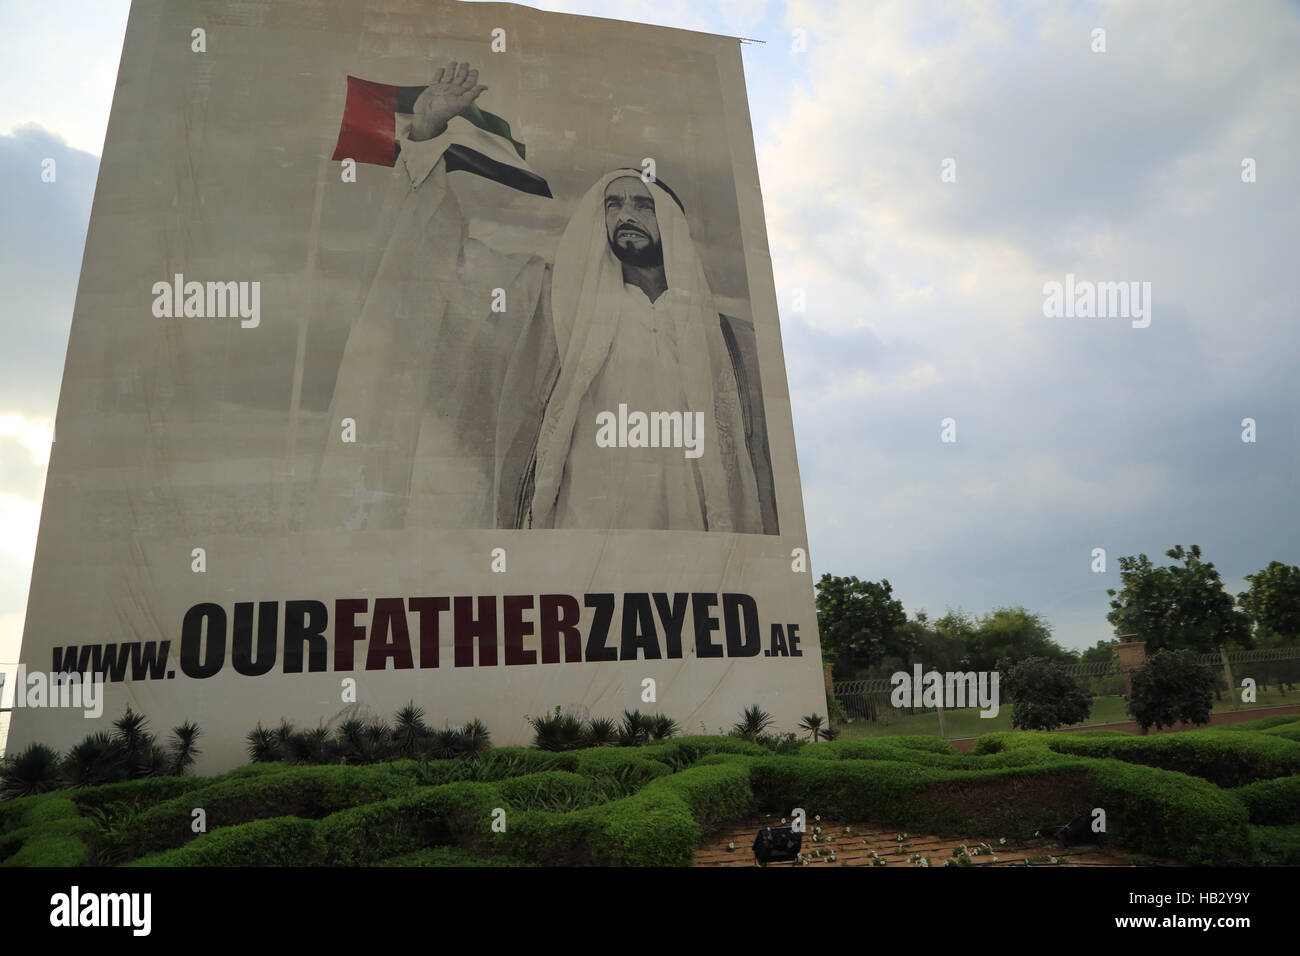 Abu Dhabi, ourfatherzayed campaign Stock Photo